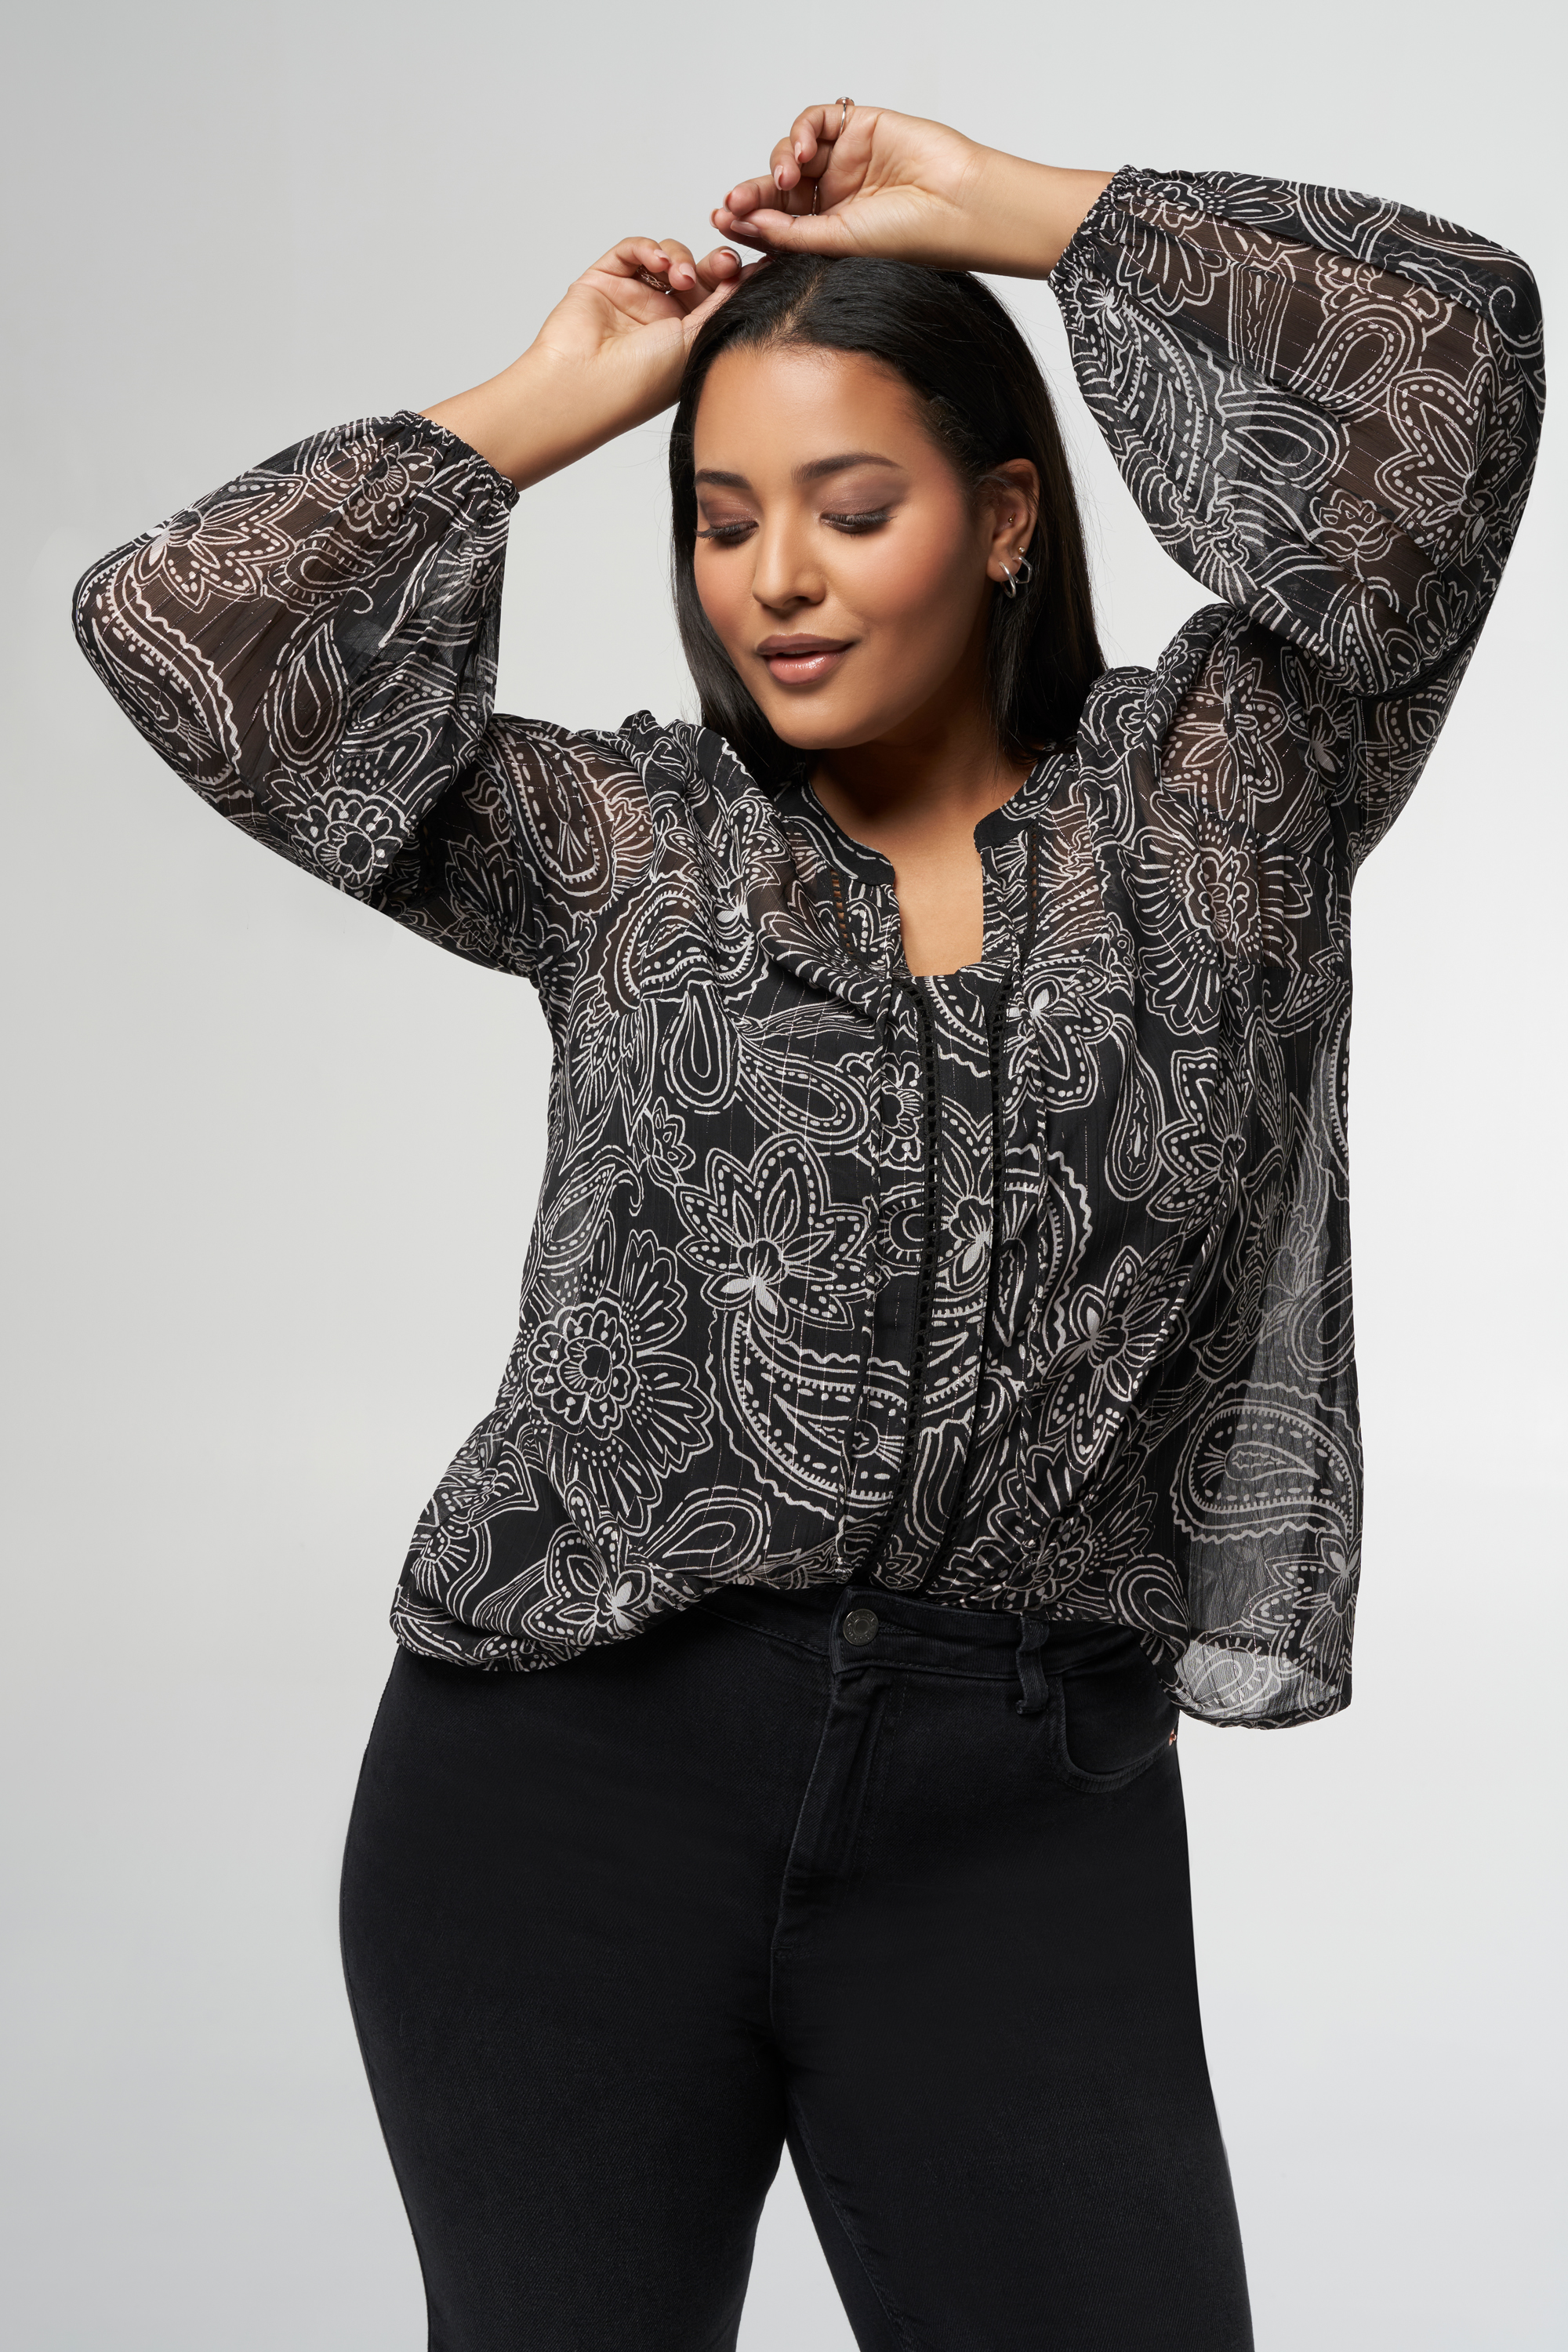 Damen Bluse mit Paisley-Print Multi schwarz-weiss | MS Mode